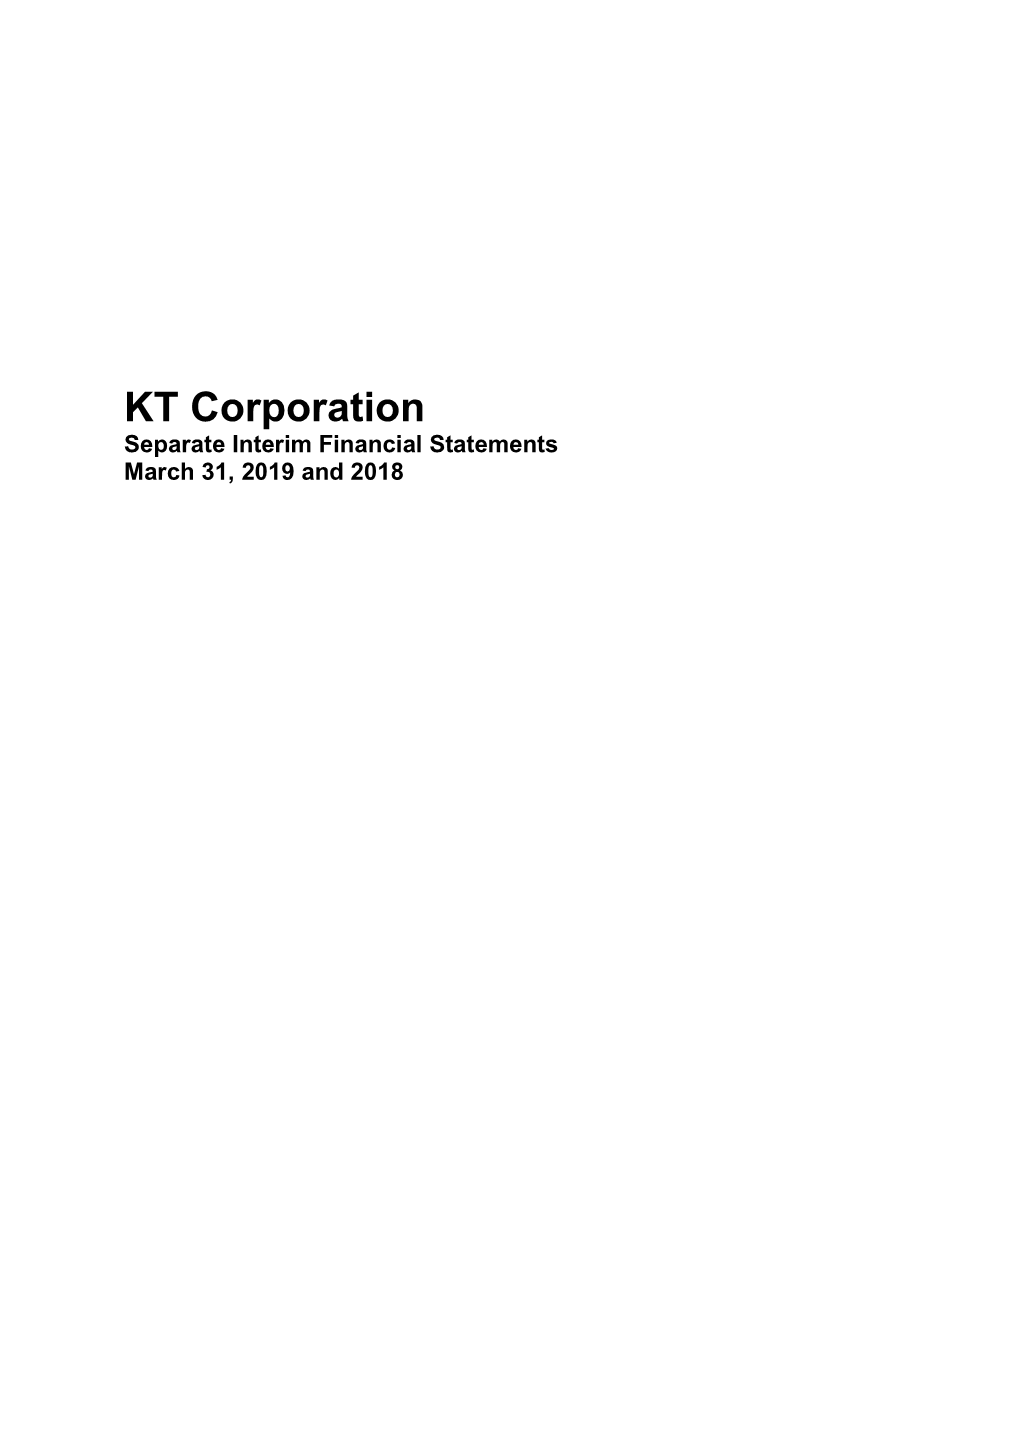 KT Corporation Separate Interim Financial Statements March 31, 2019 and 2018 KT Corporation Index March 31, 2019 and 2018